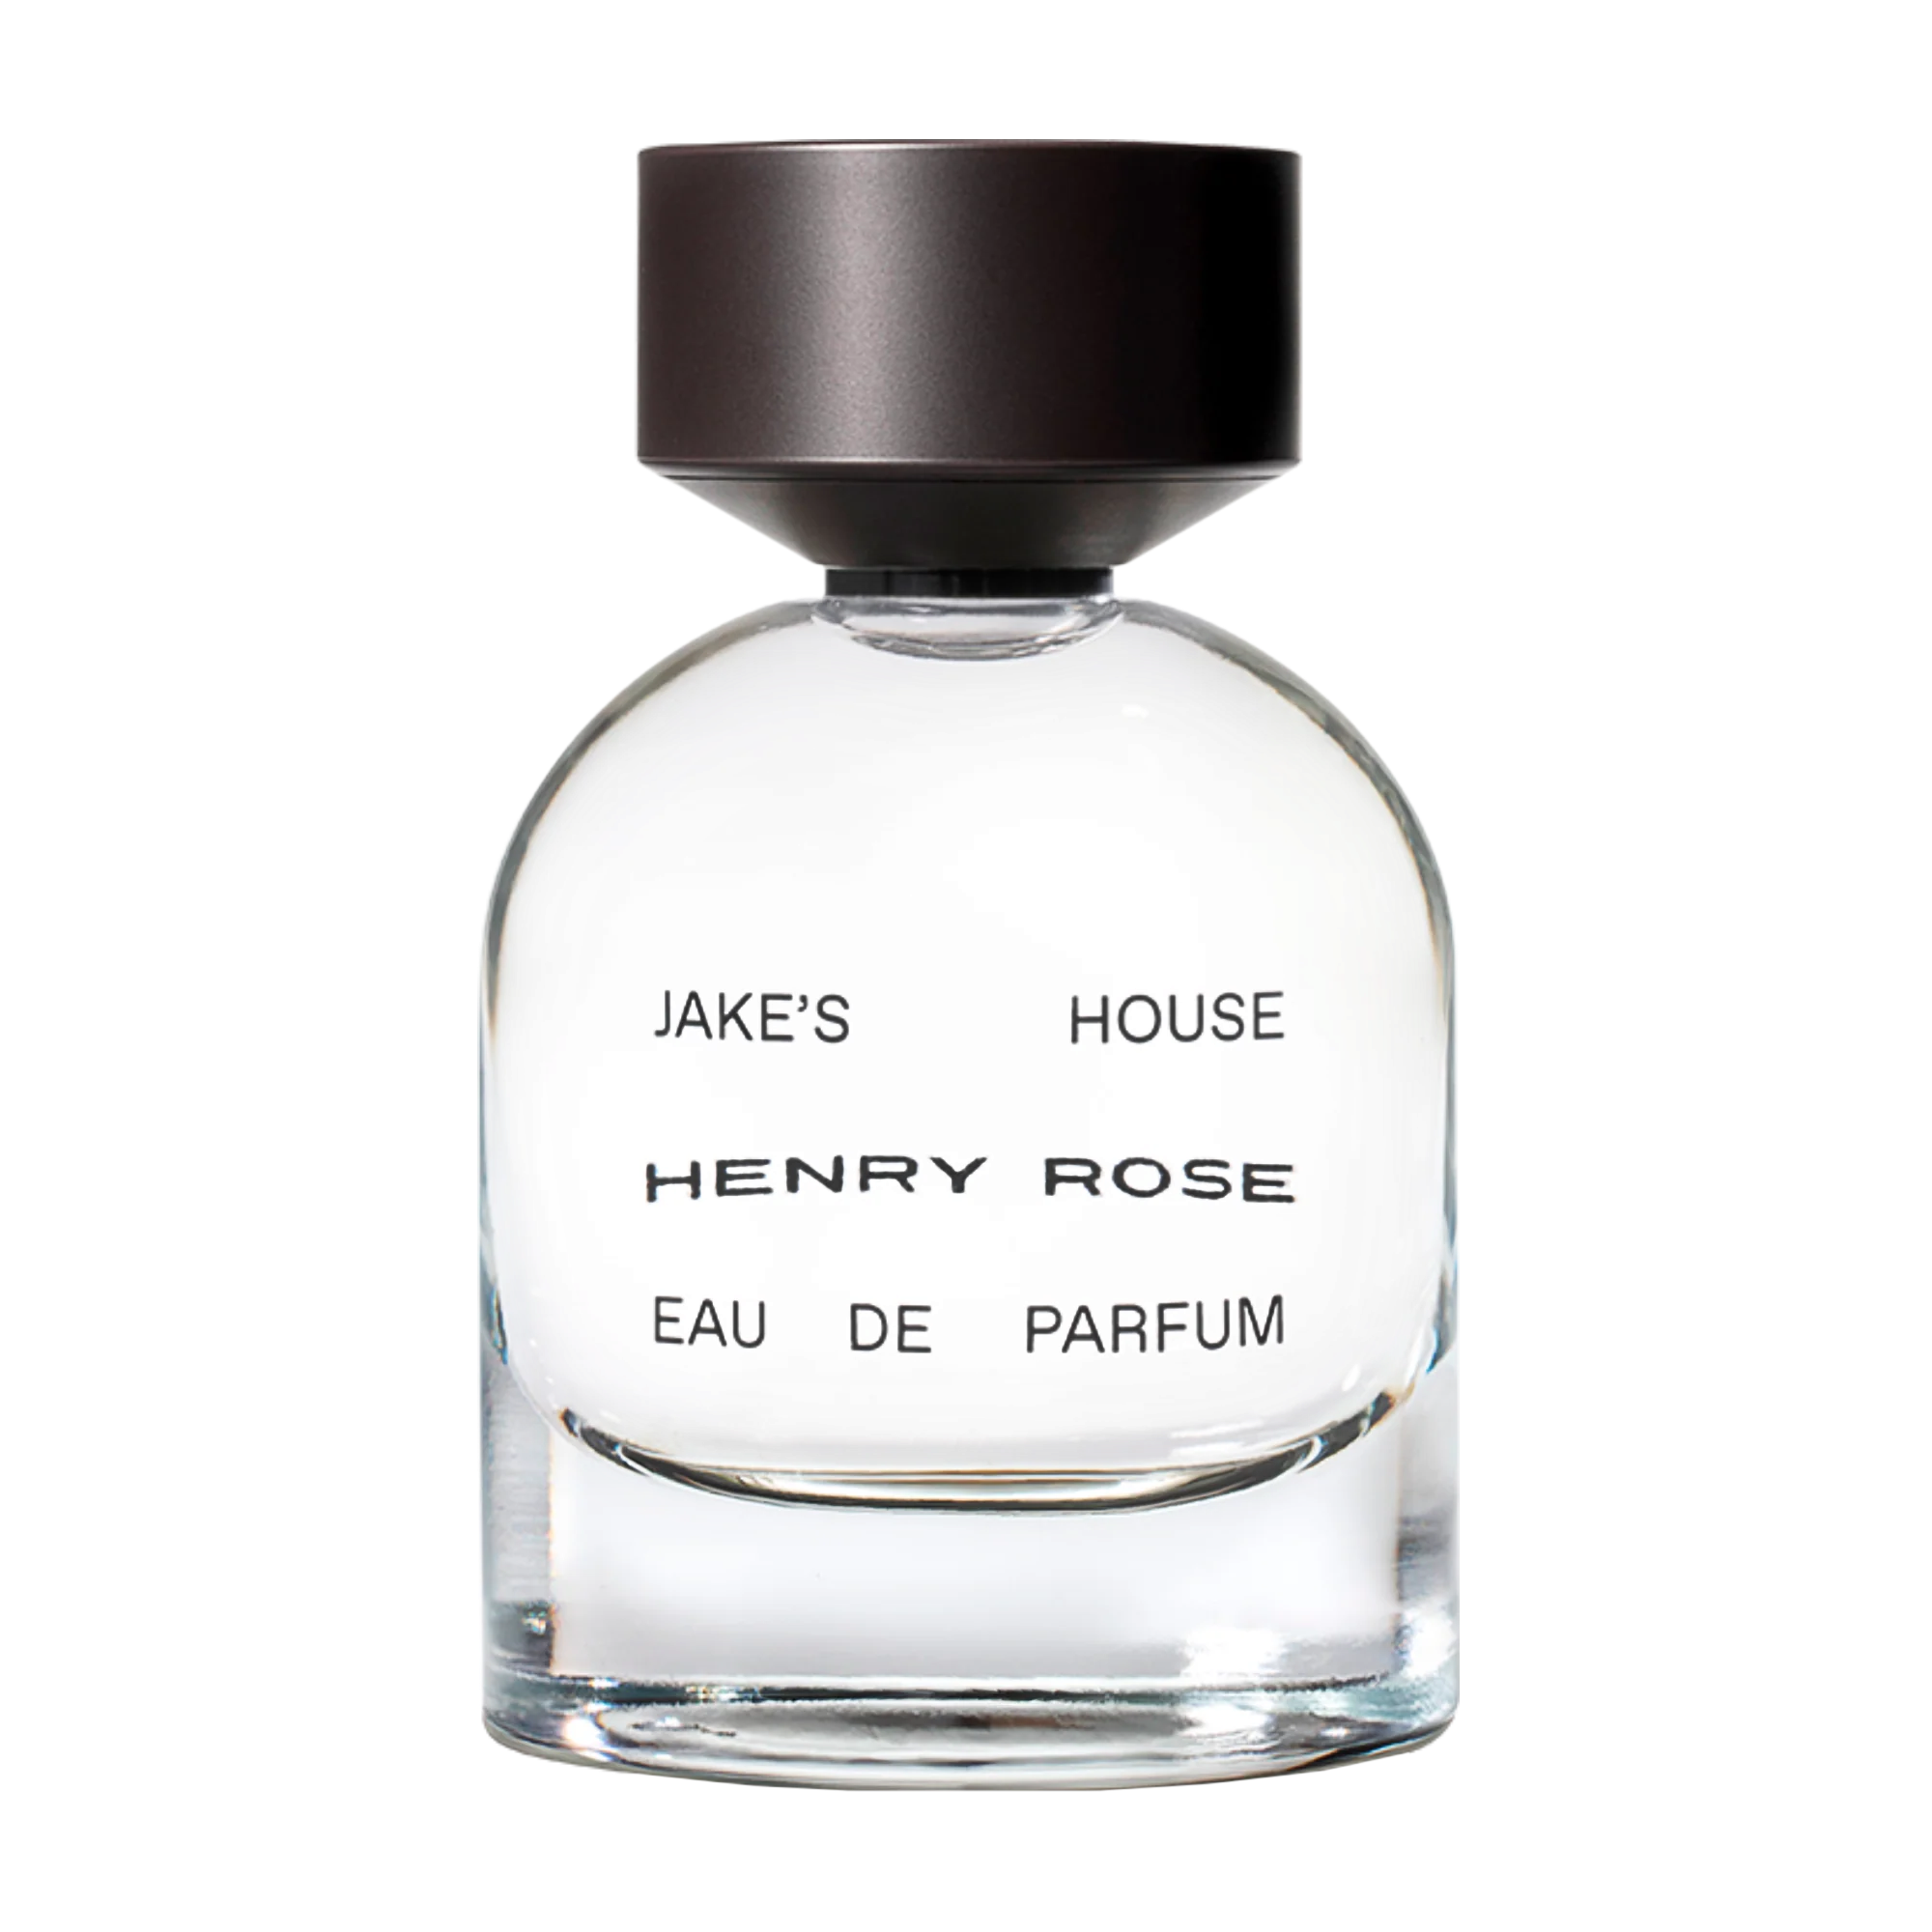 Jake's house perfume